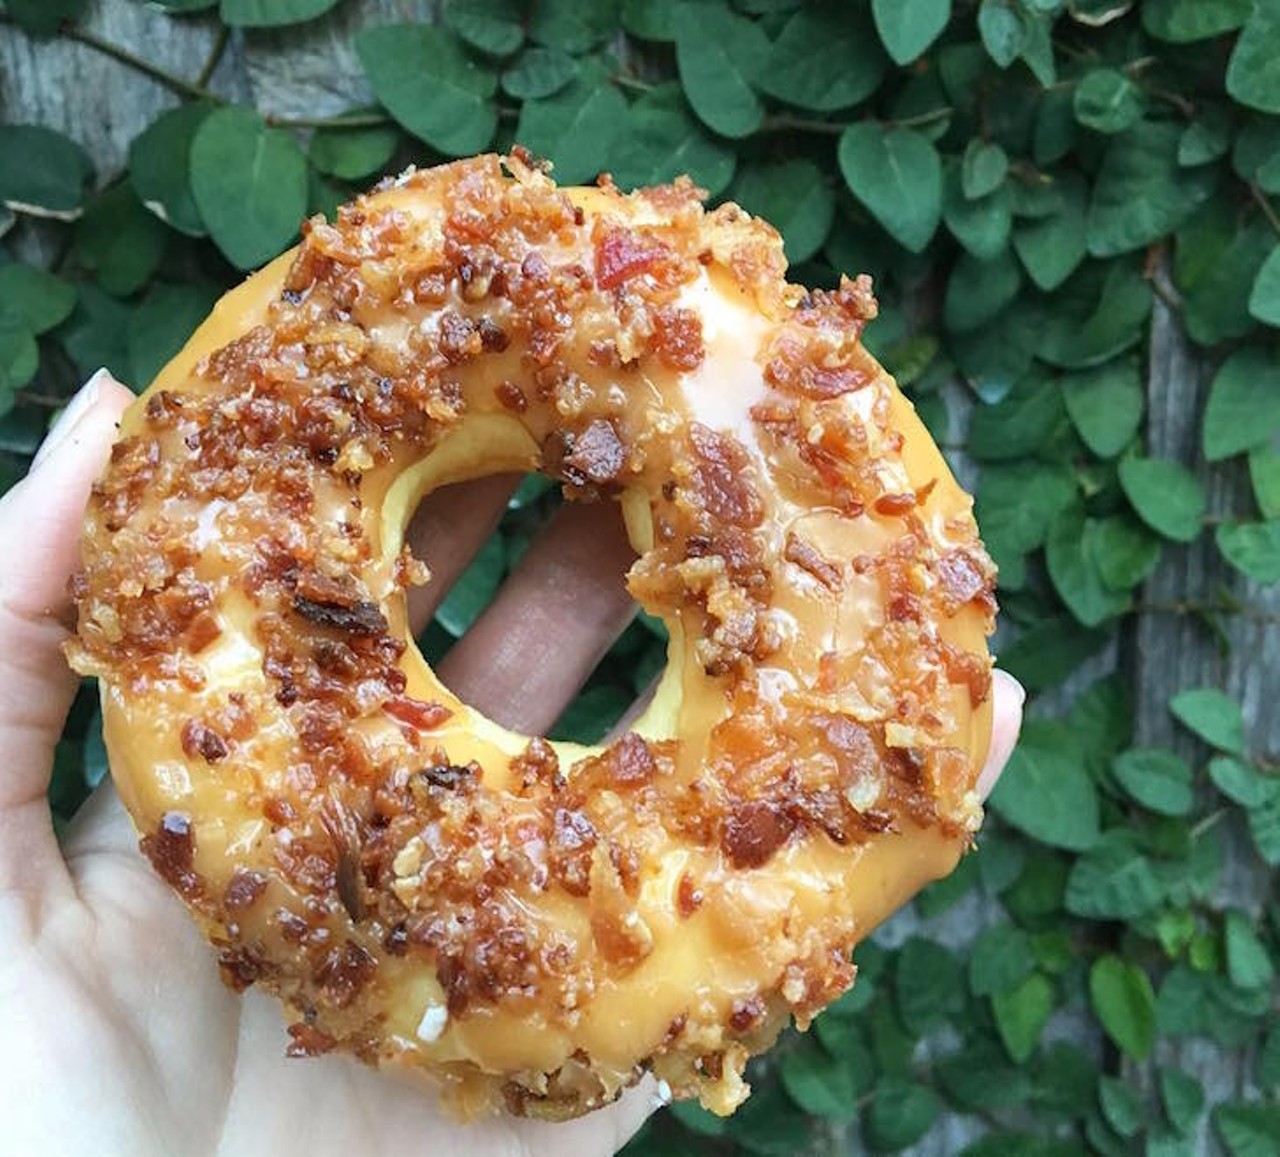 Must try: Maple Bacon Donut
Photo via sporkorlando/Instagram